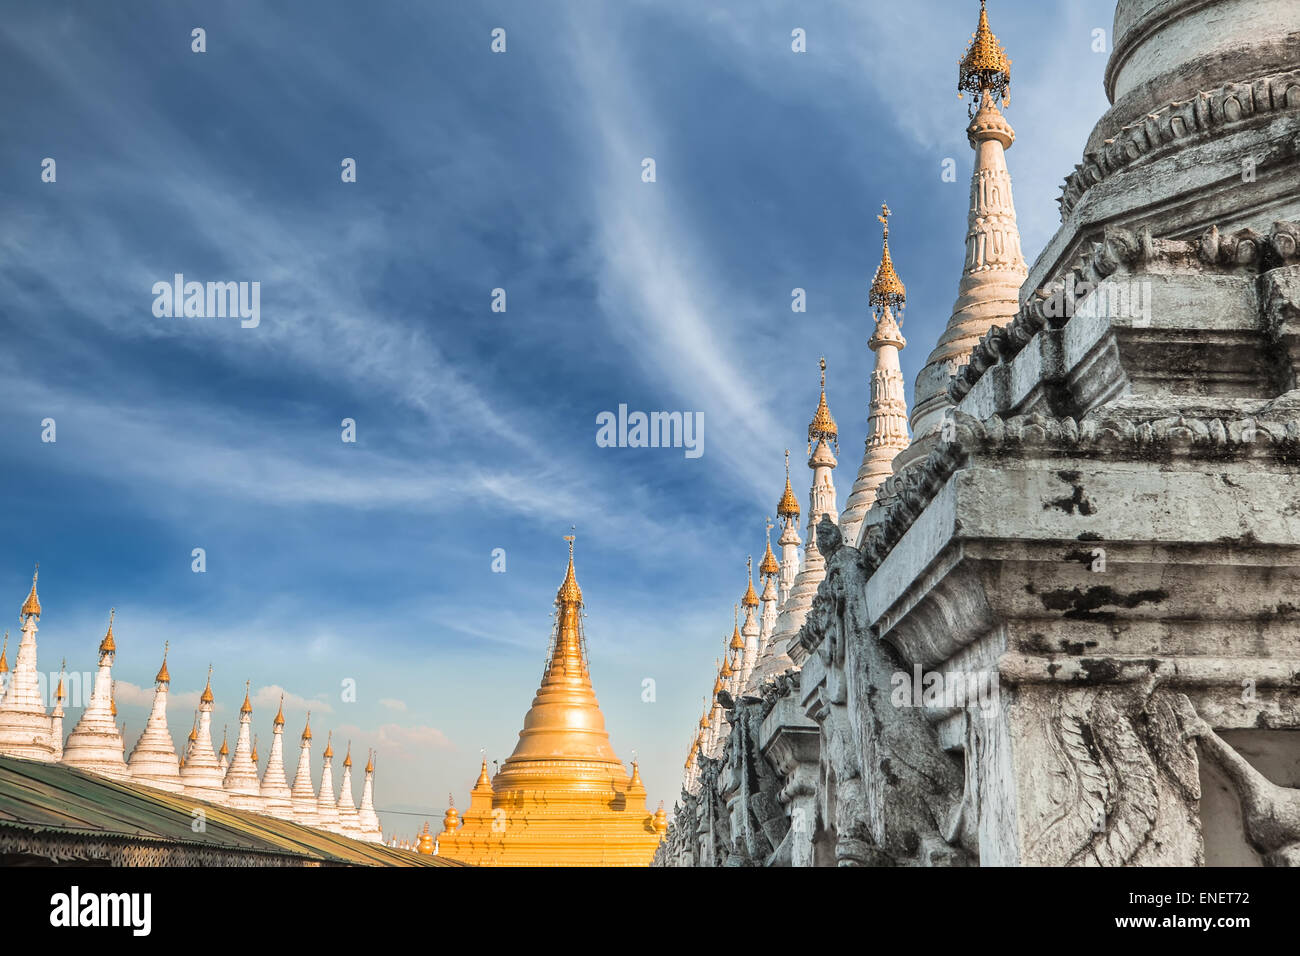 Golden Sandamuni Pagoda with row of white pagodas. Amazing architecture of Buddhist Temples at Mandalay. Myanmar (Burma) travel Stock Photo